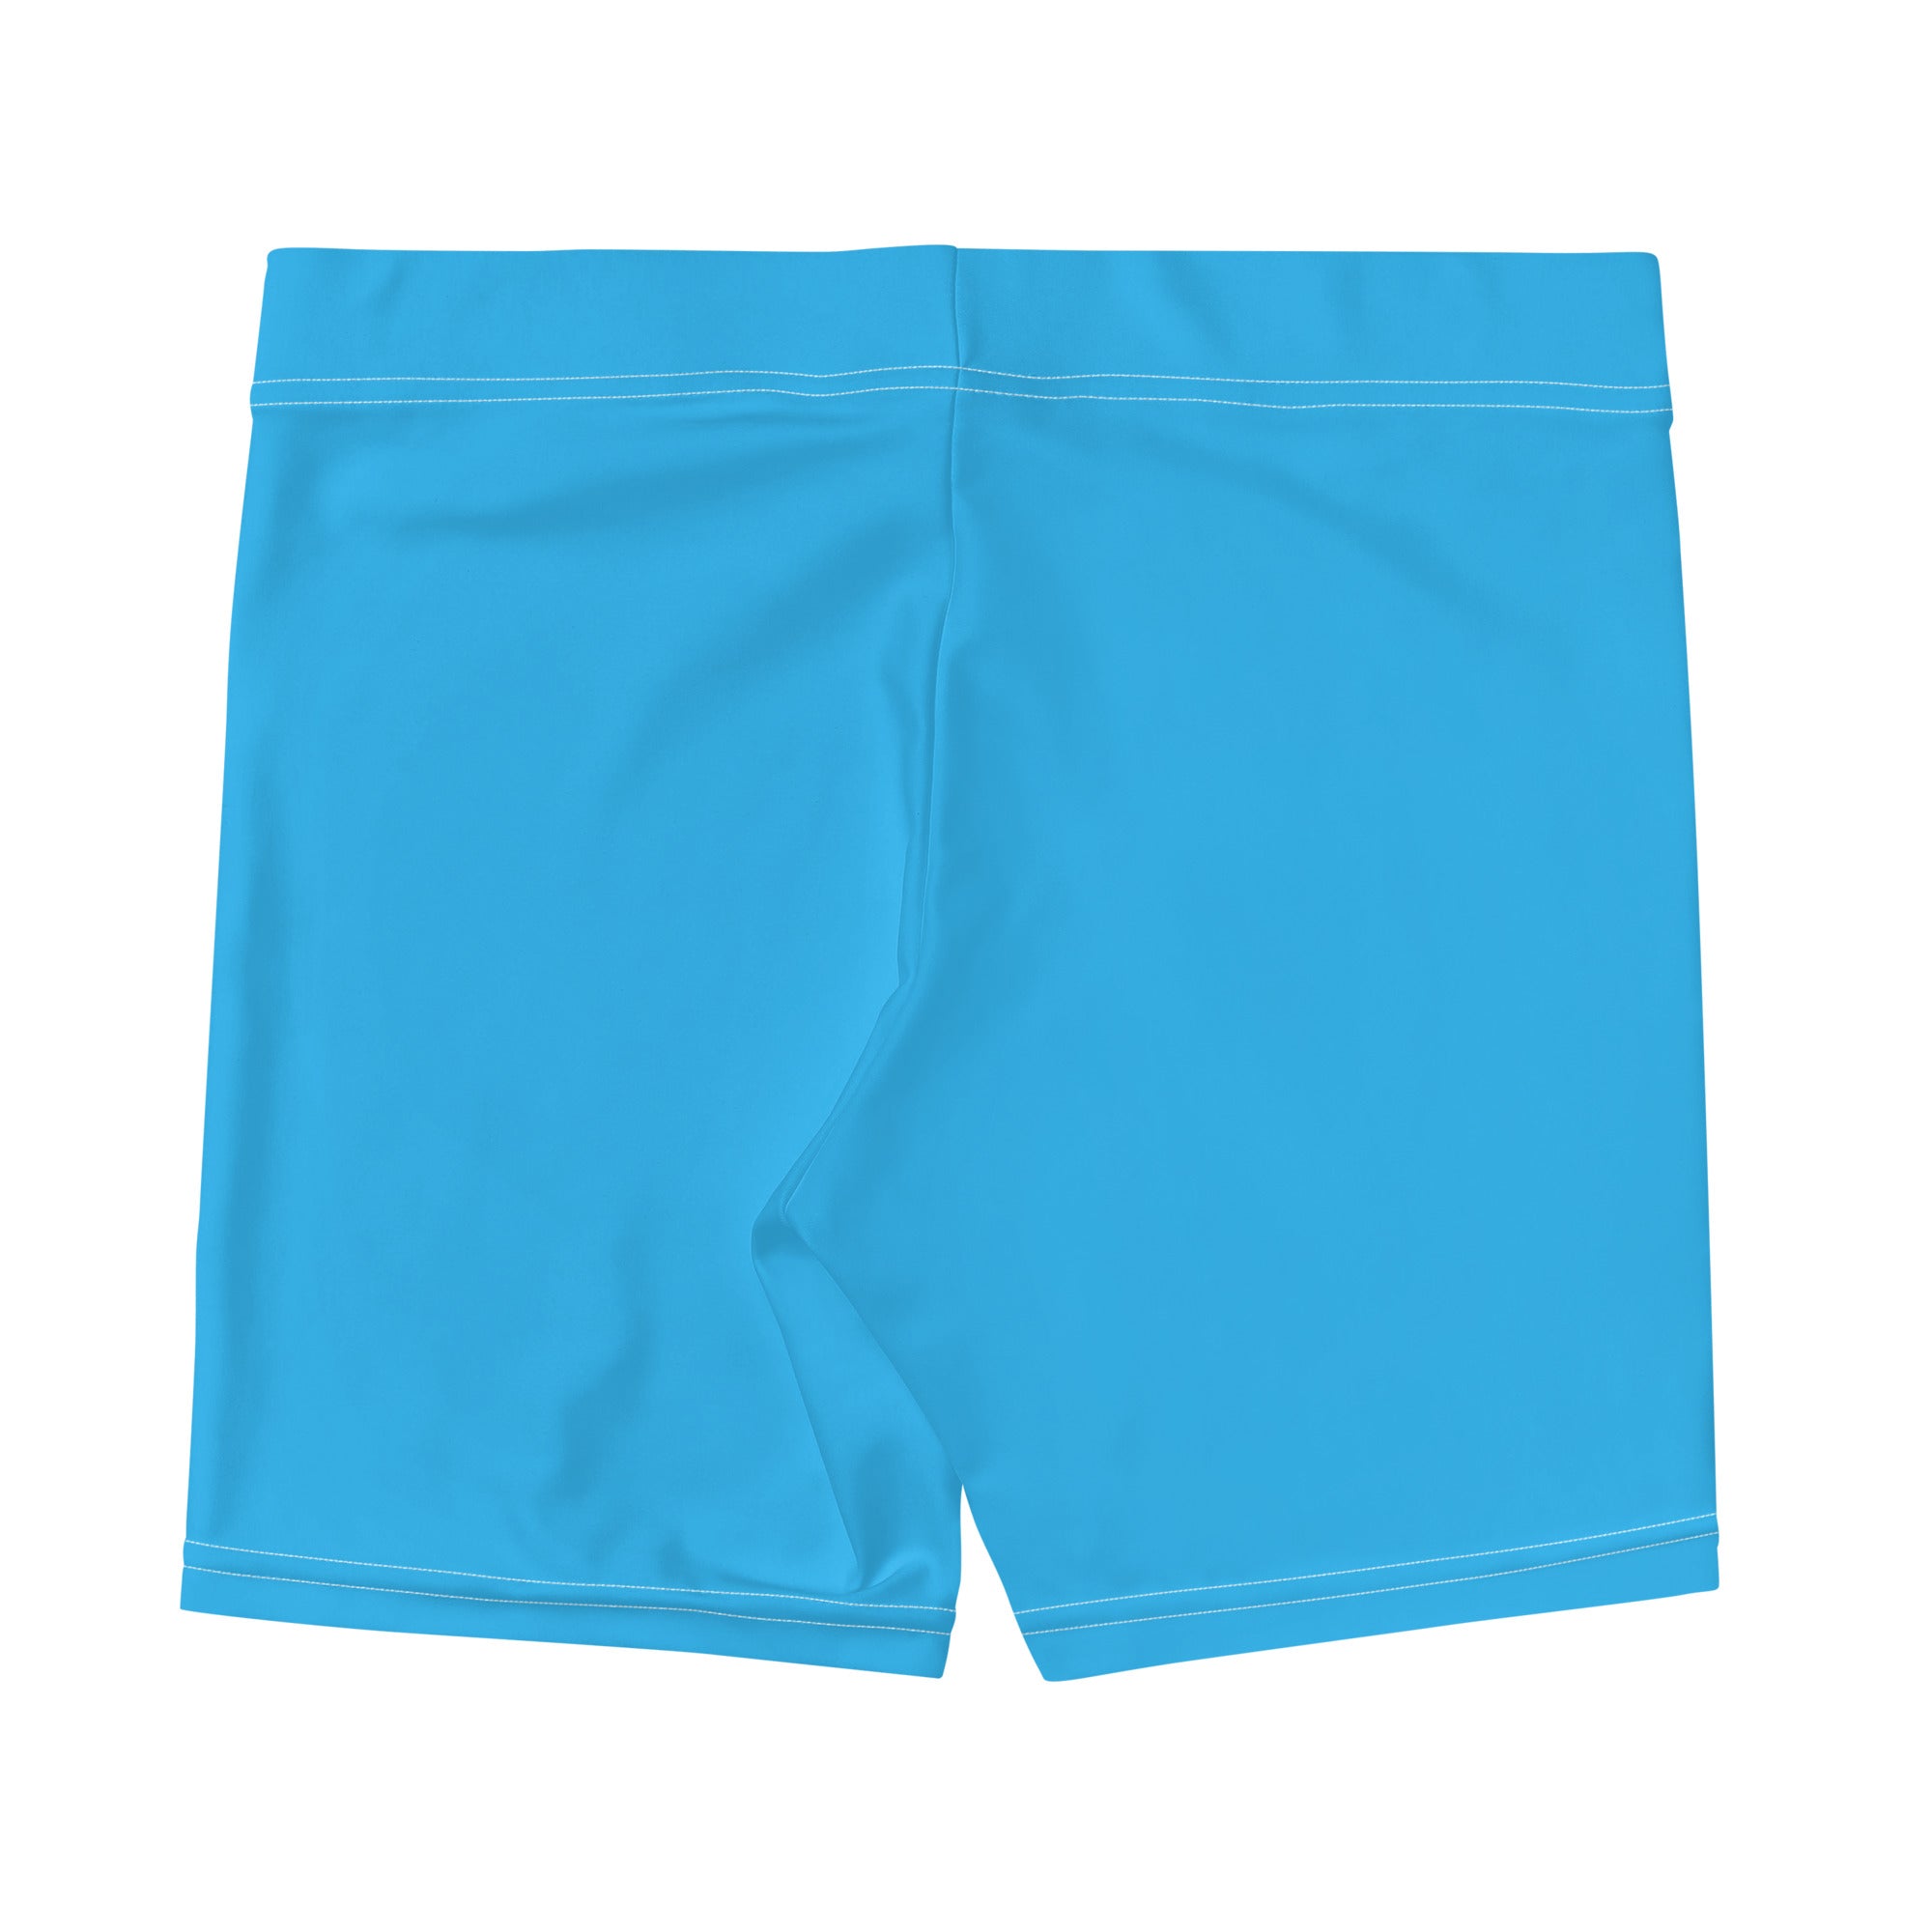 Deep Sky Blue Gym Shorts - Women's Gym Shorts - DRAGON FOXX™ - Deep Sky Blue Gym Shorts - 5322617_9296 - XS - Deep Sky Blue - Gym Shorts - Deep Sky Blue - Deep Sky Blue Gym Shorts - Dragon Foxx™